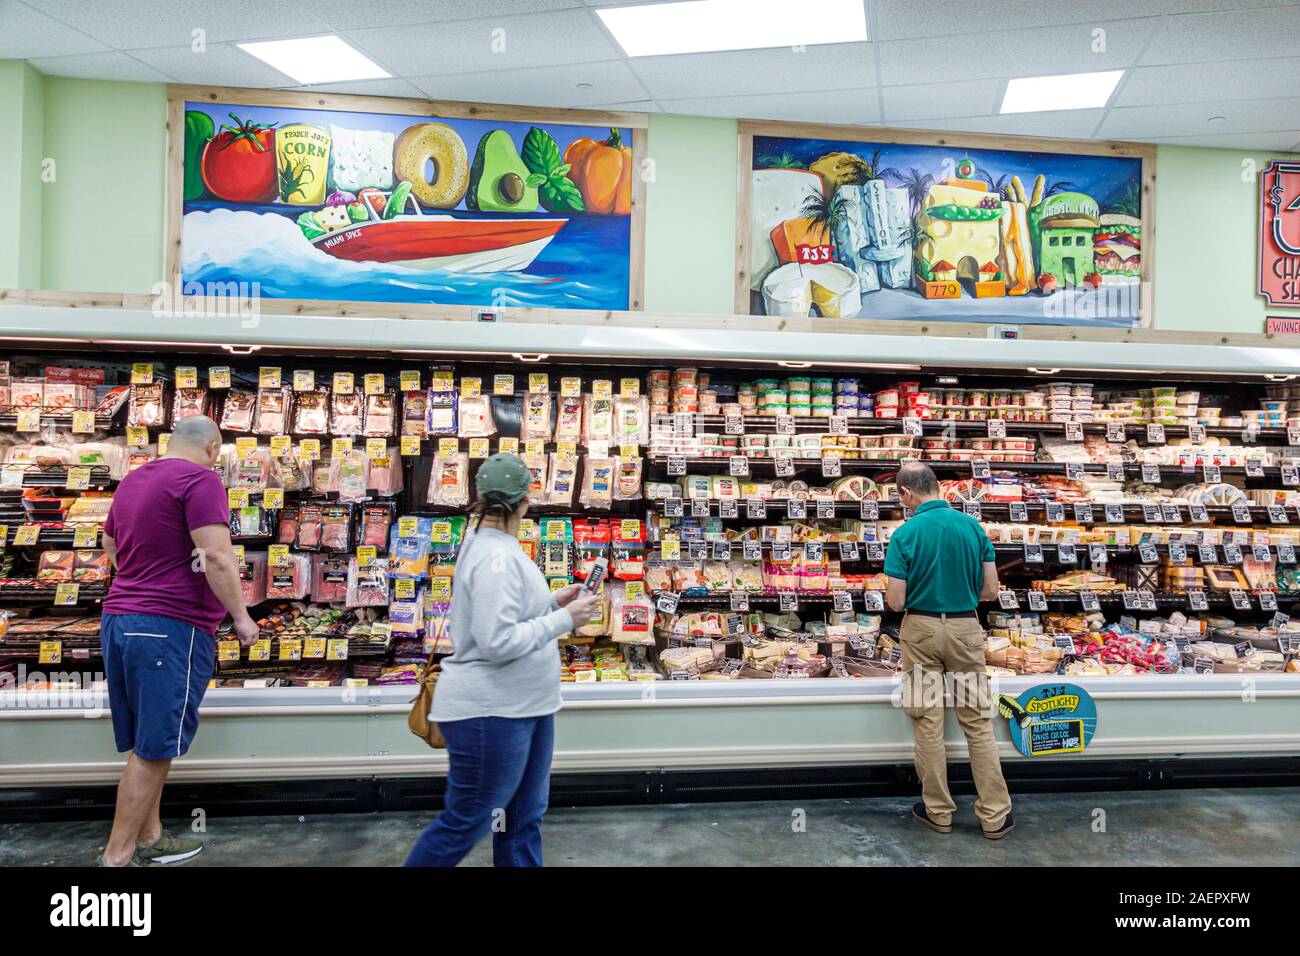 Miami Beach Florida, Trader Joe's, Supermarkt Lebensmittel, Einkaufen, innen, Feinkost, Käse, Aufschnitt, Kühlkoffer, Frau, Mann, Display Sal Stockfoto